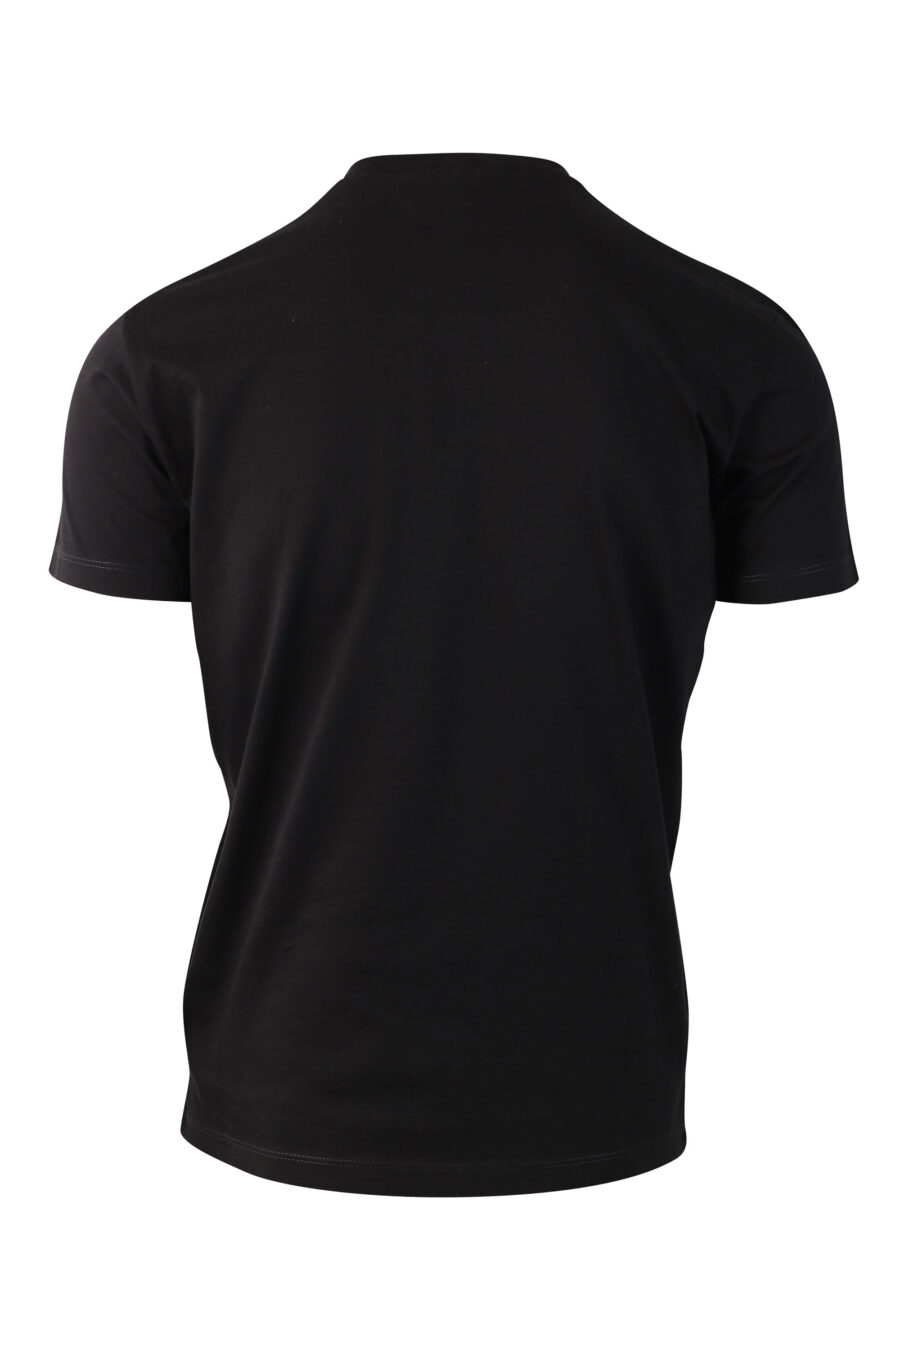 T-shirt noir avec minilogue - IMG 9996